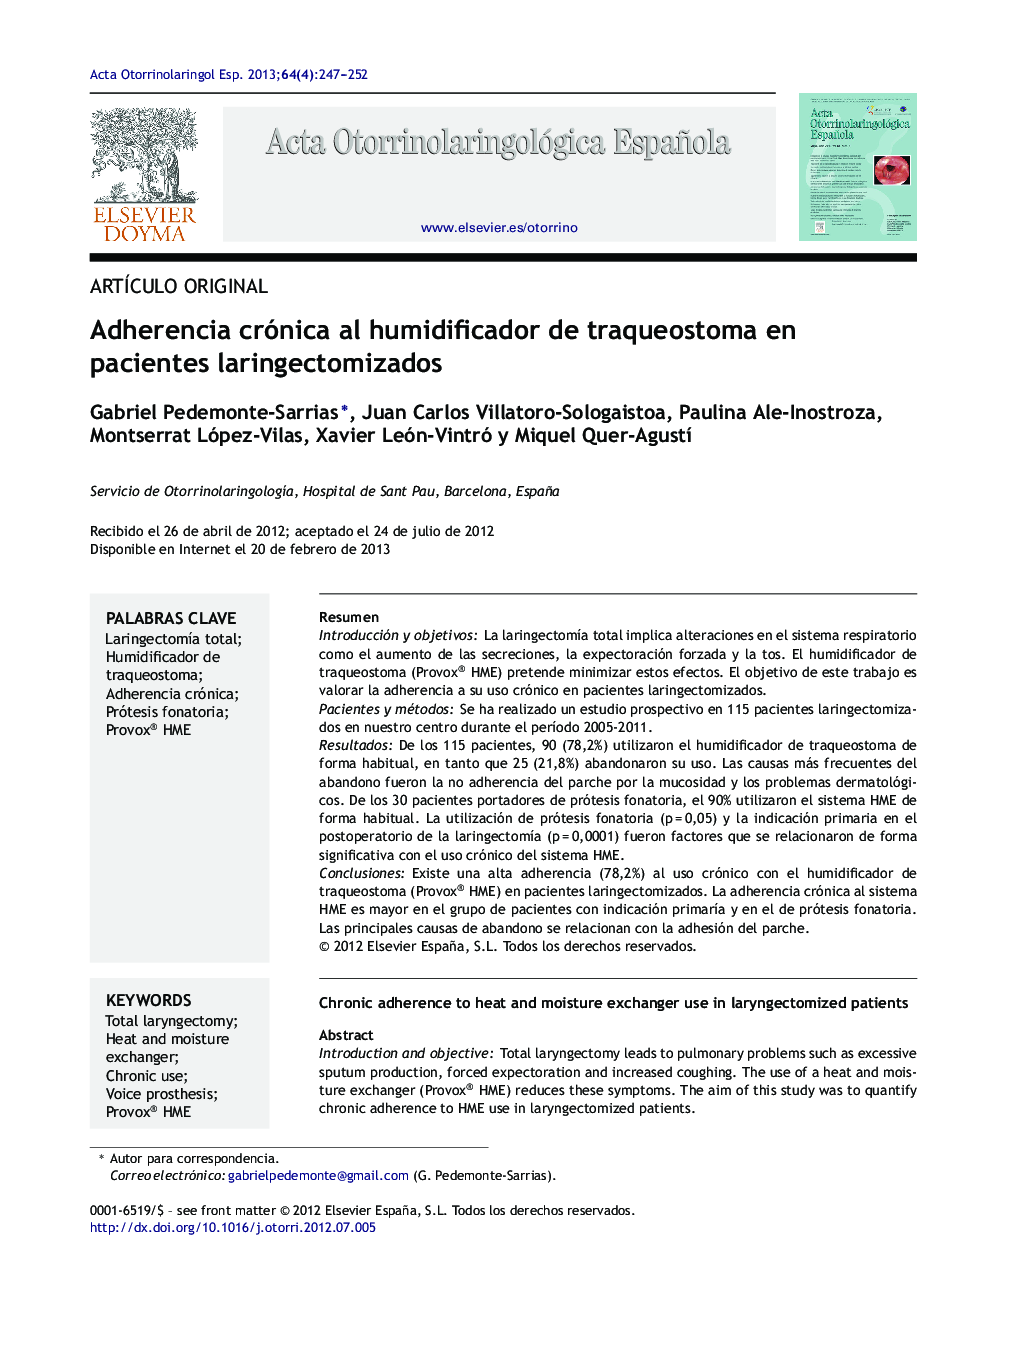 Adherencia crónica al humidificador de traqueostoma en pacientes laringectomizados